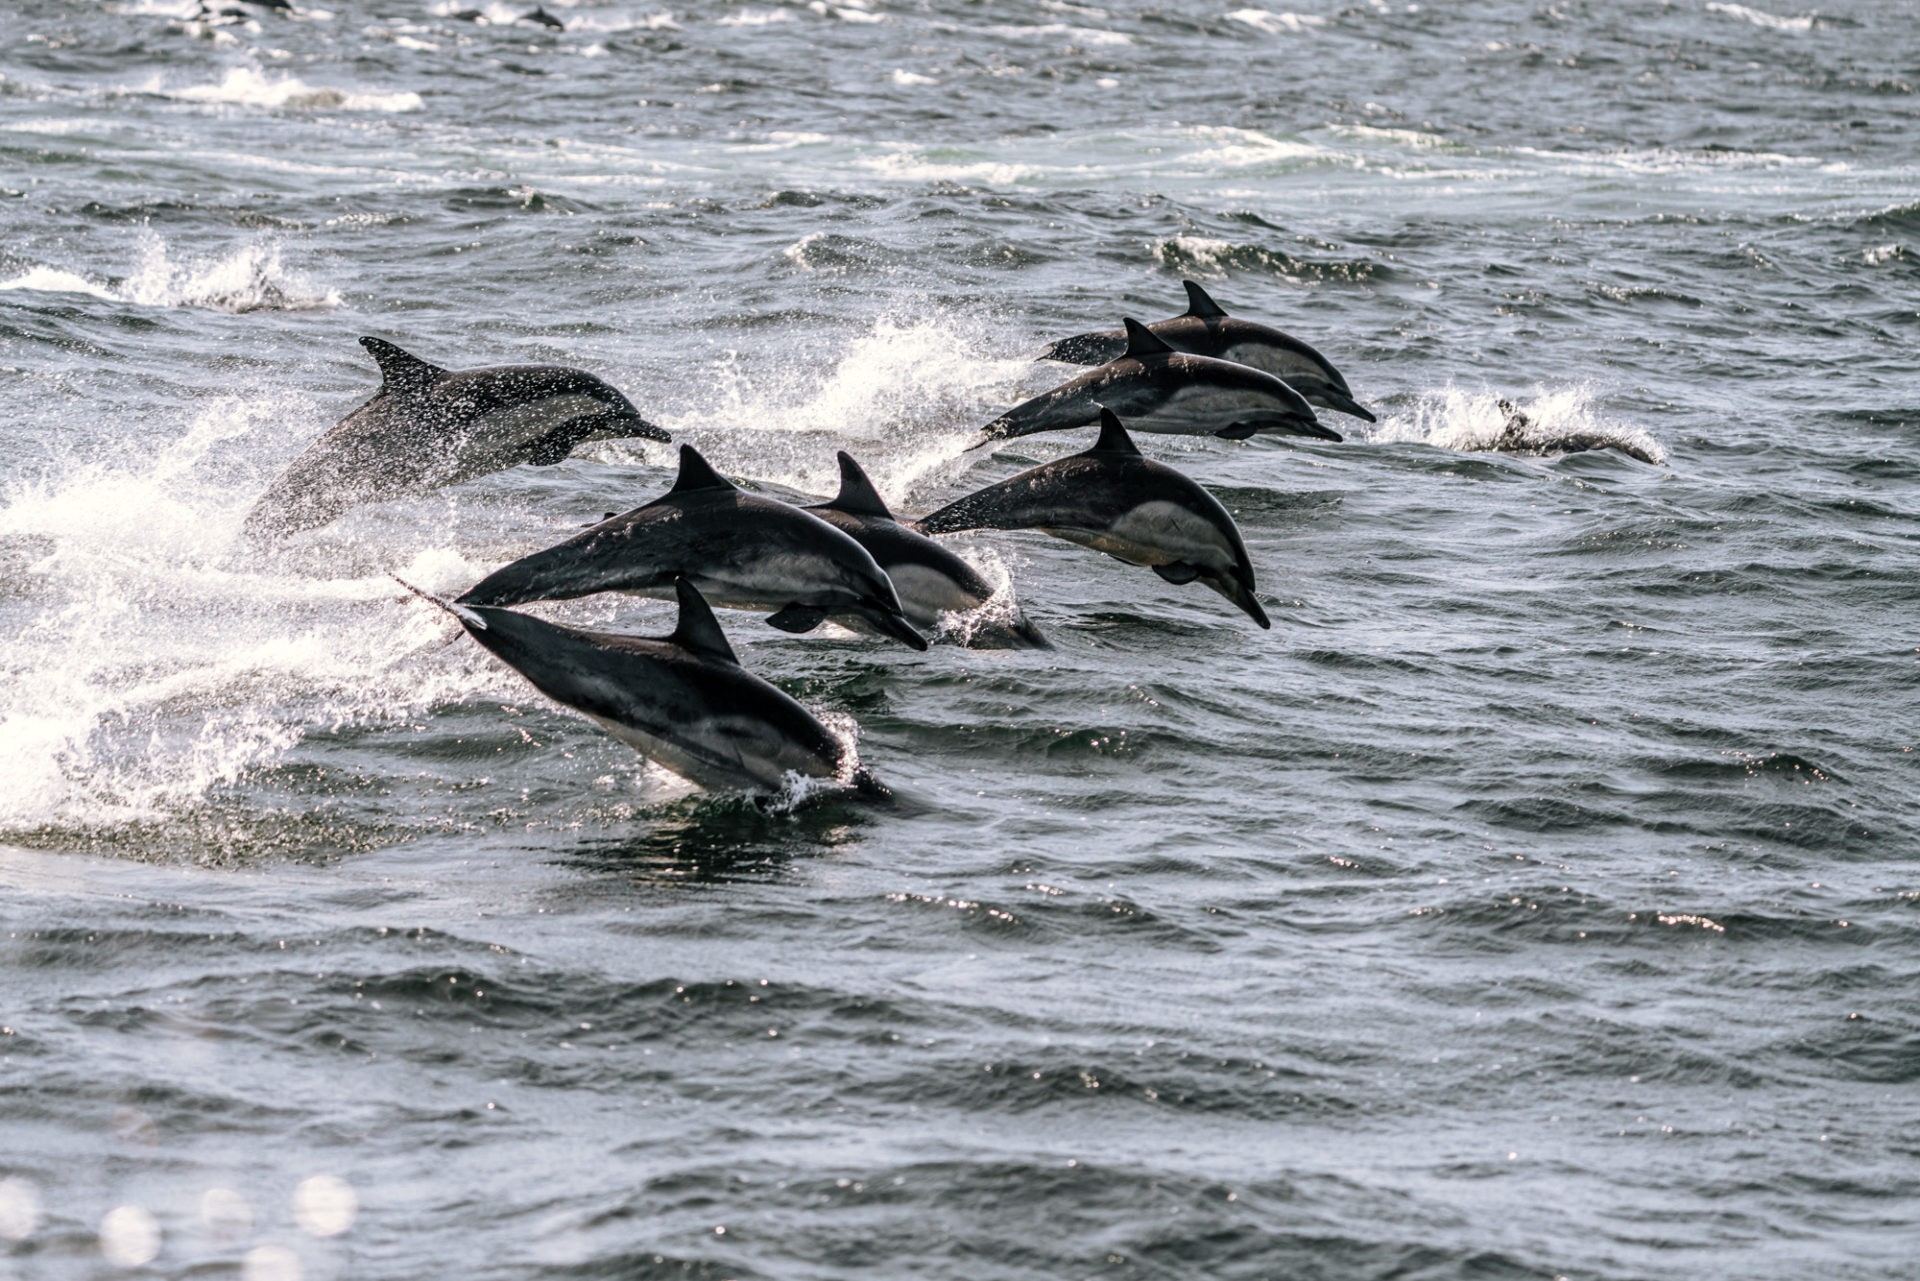 USA California Ventura Channel Islands National Park dolphins 01561